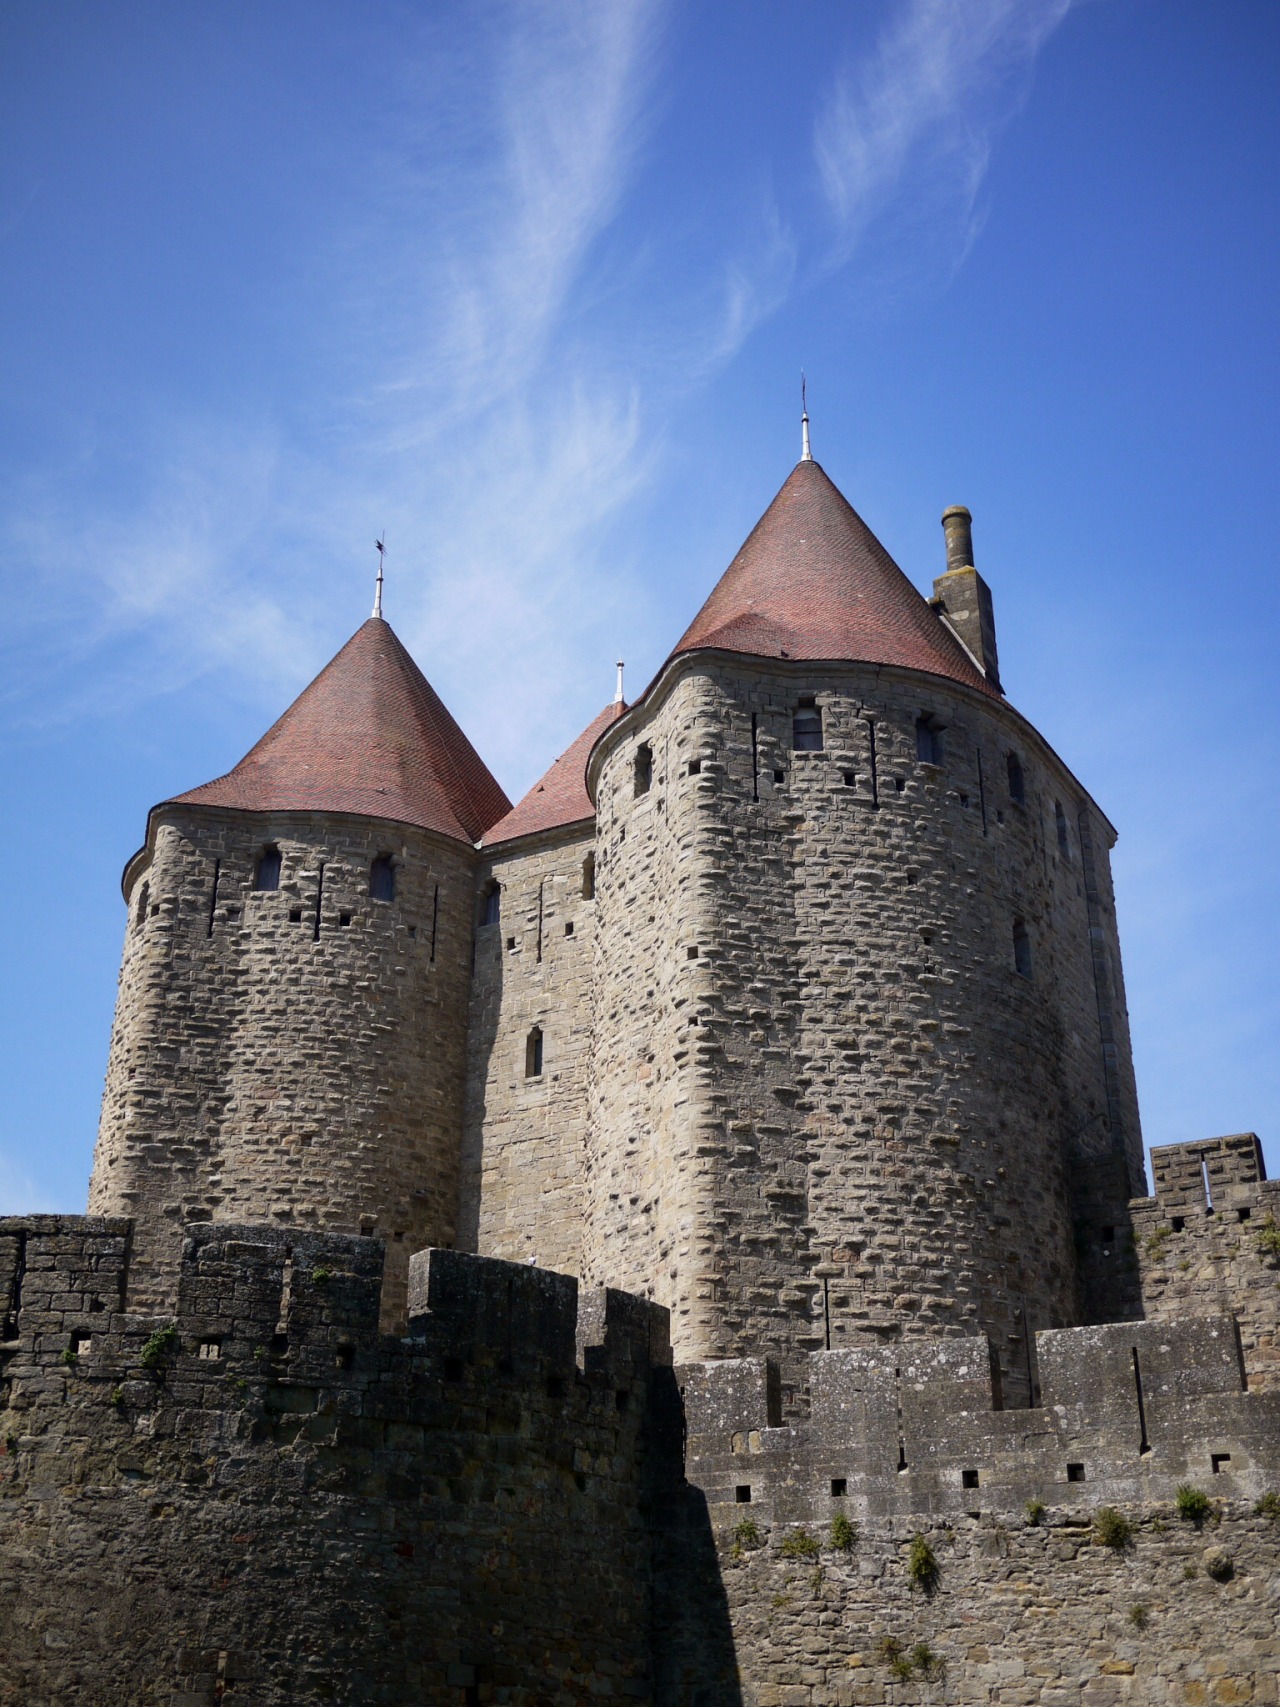 Exploring Carcassonne, France